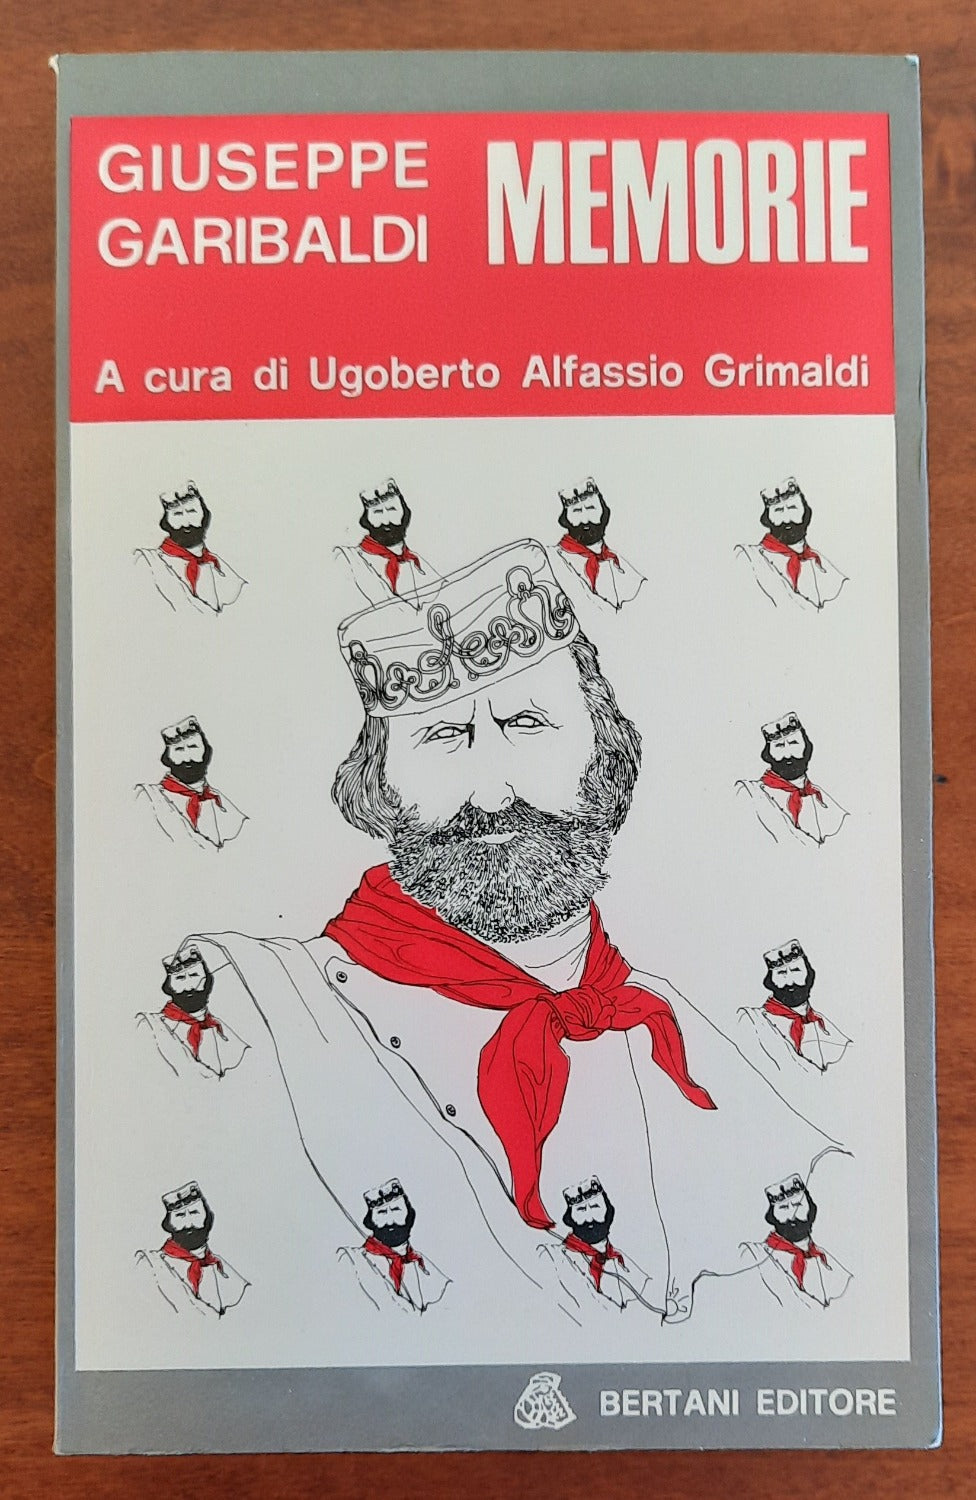 Giuseppe Garibaldi. Memorie